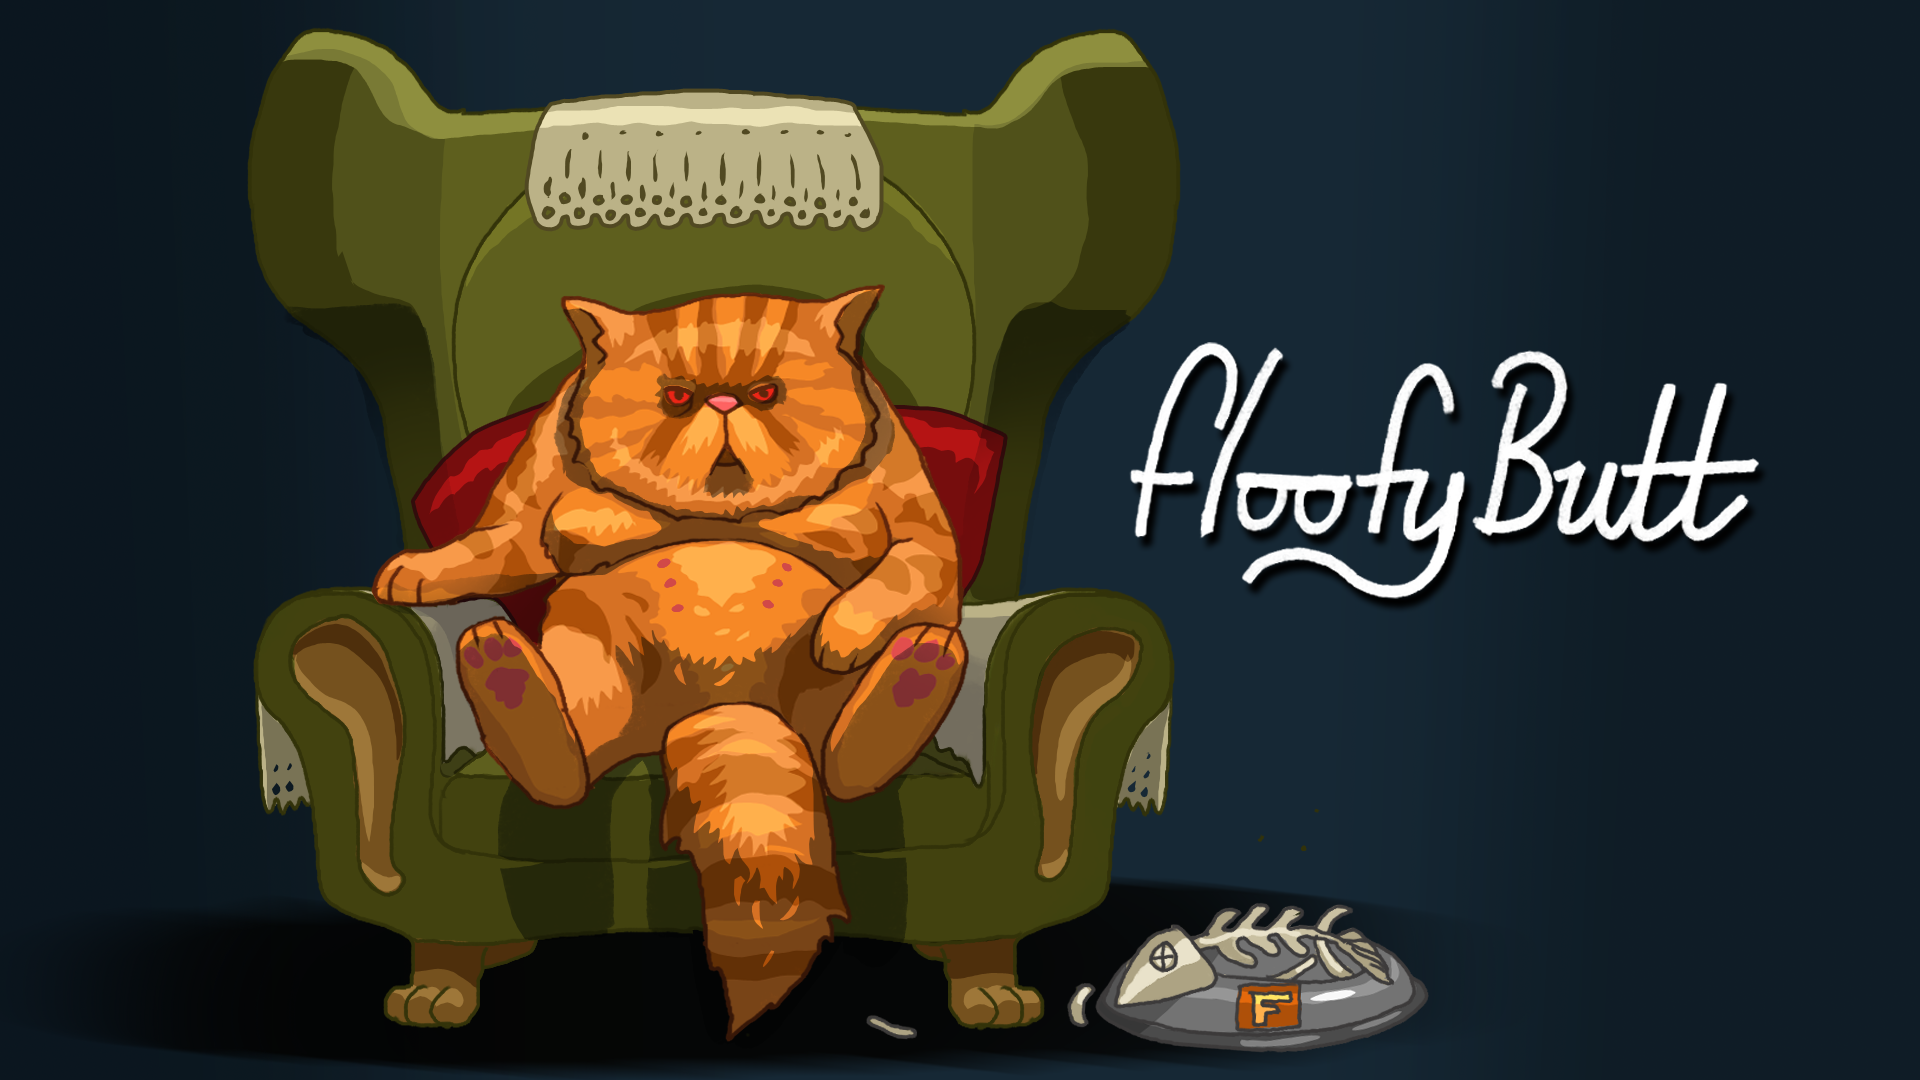 Floofybutt from dating sim visual novel steam game Purrfect Date